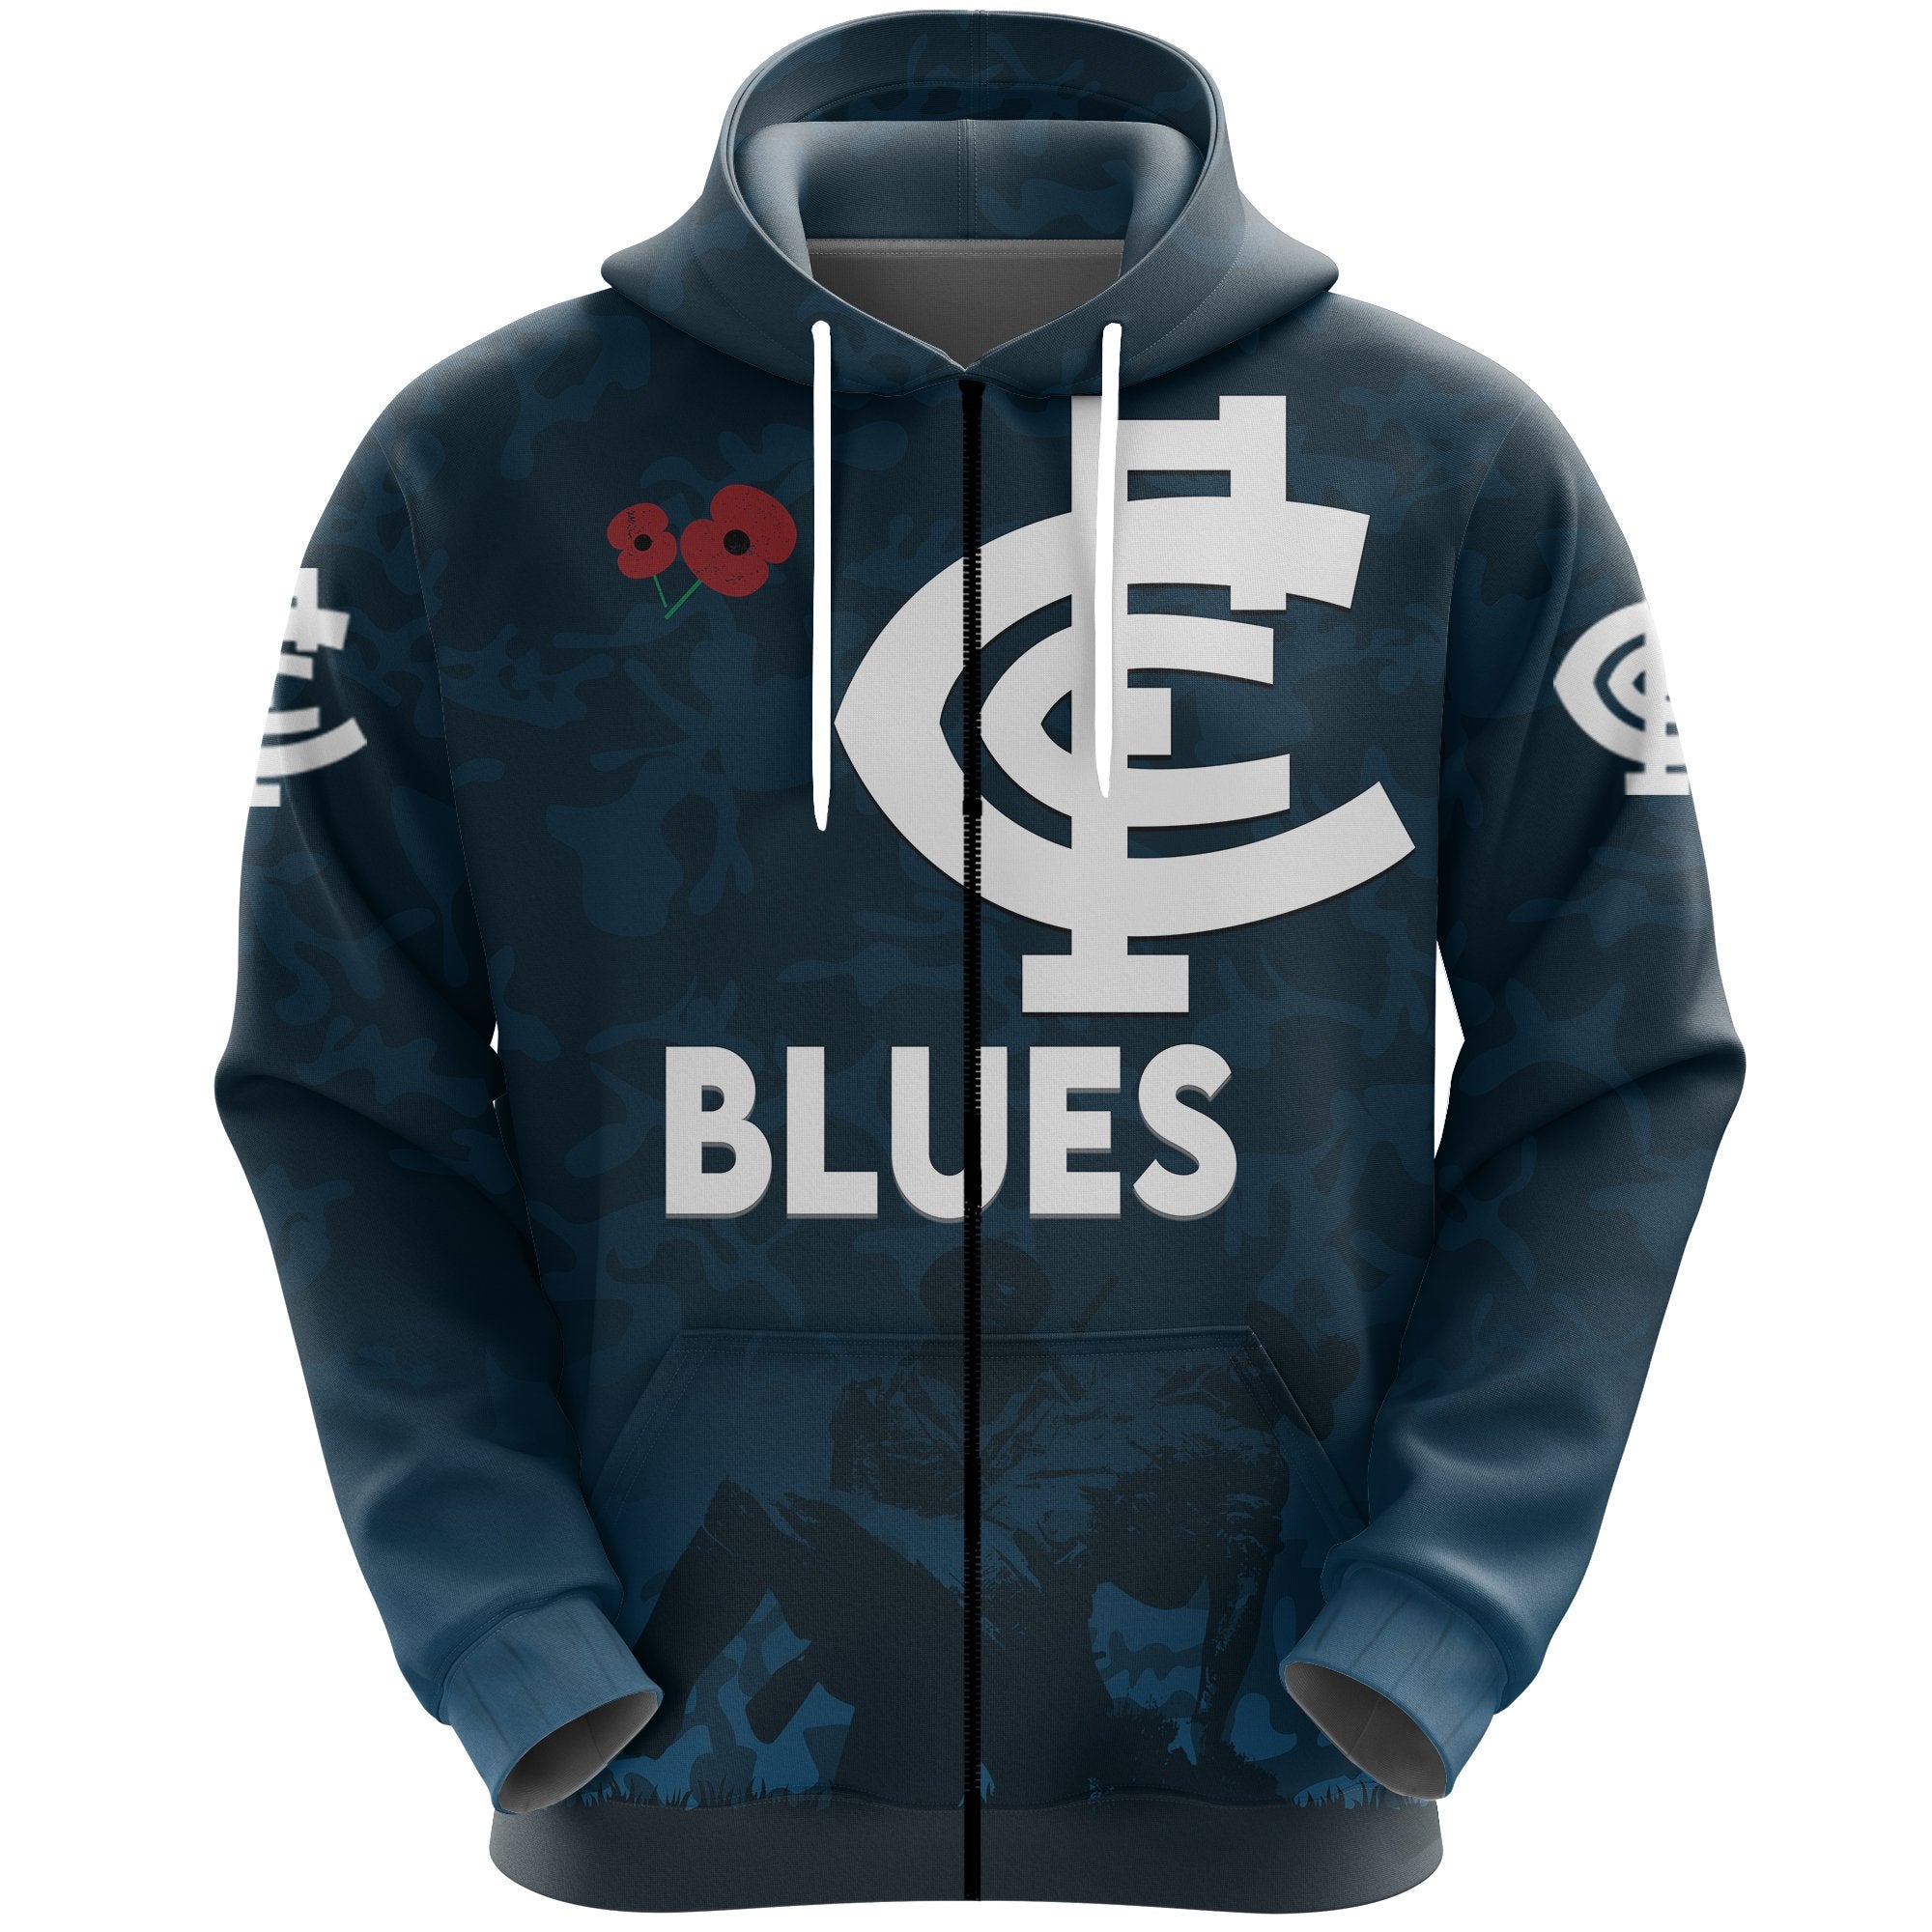 australia-zip-hoodie-carlton-blues-anzac-day